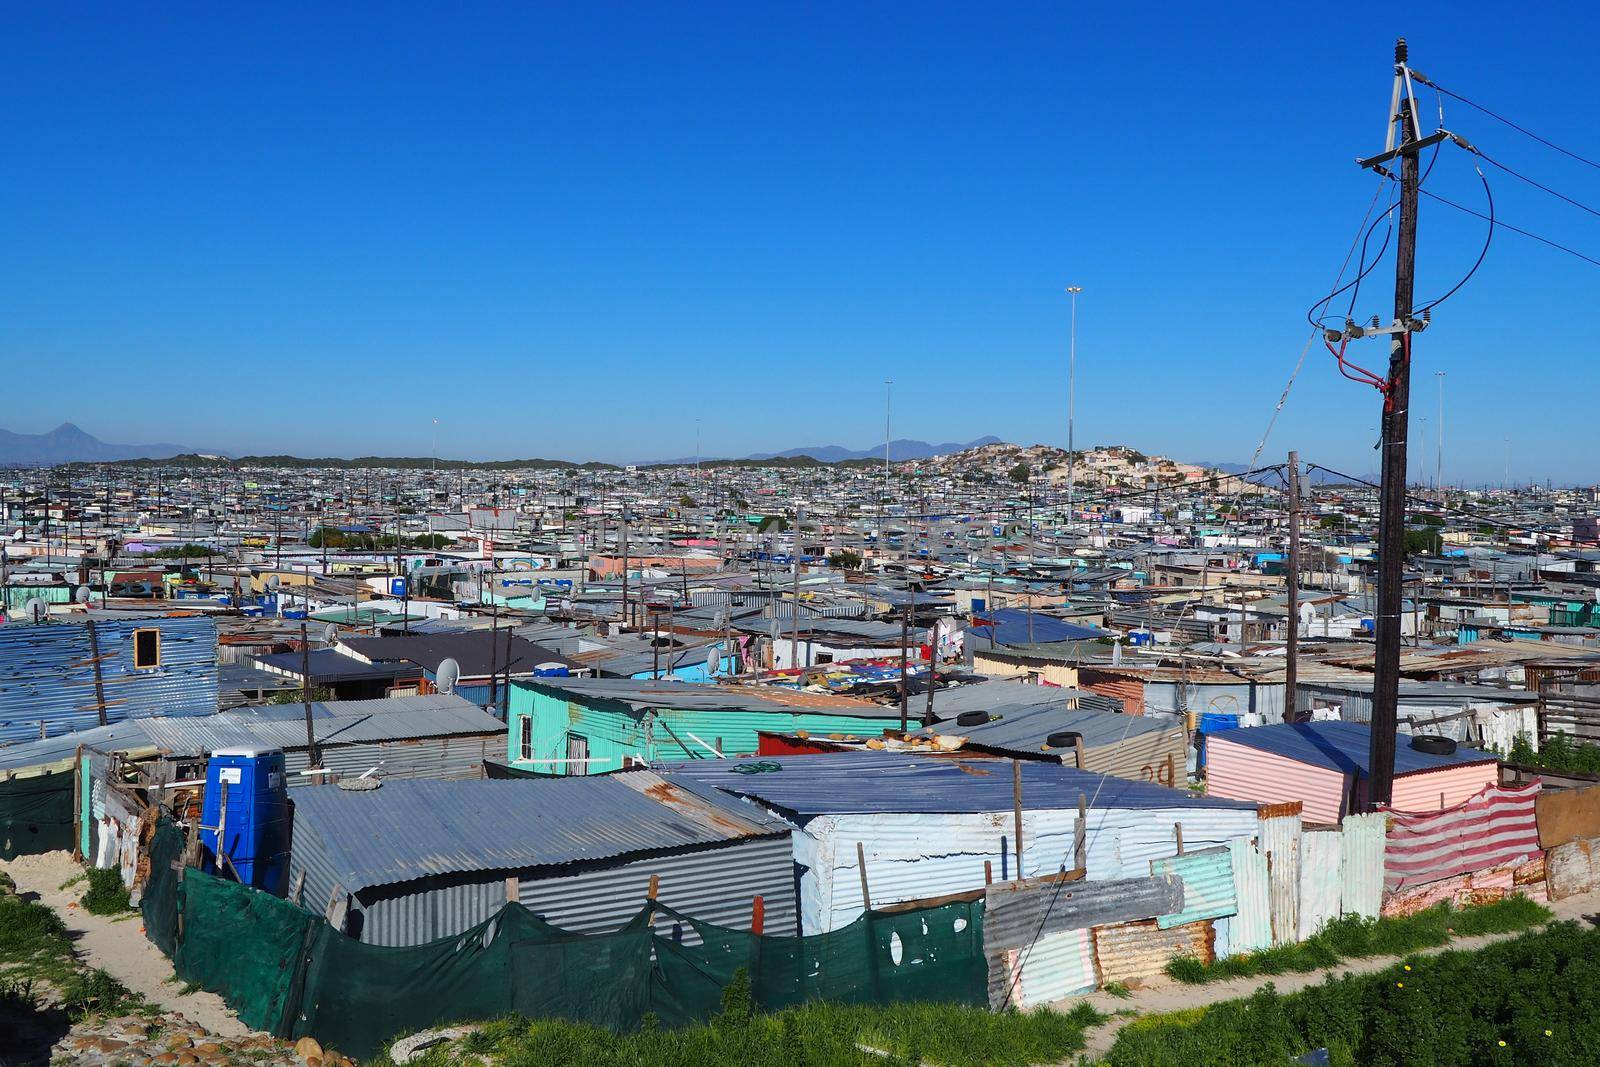 Khayelitsha township, South Africa - 29 August 2018 : BAckyard in a township in South Africa